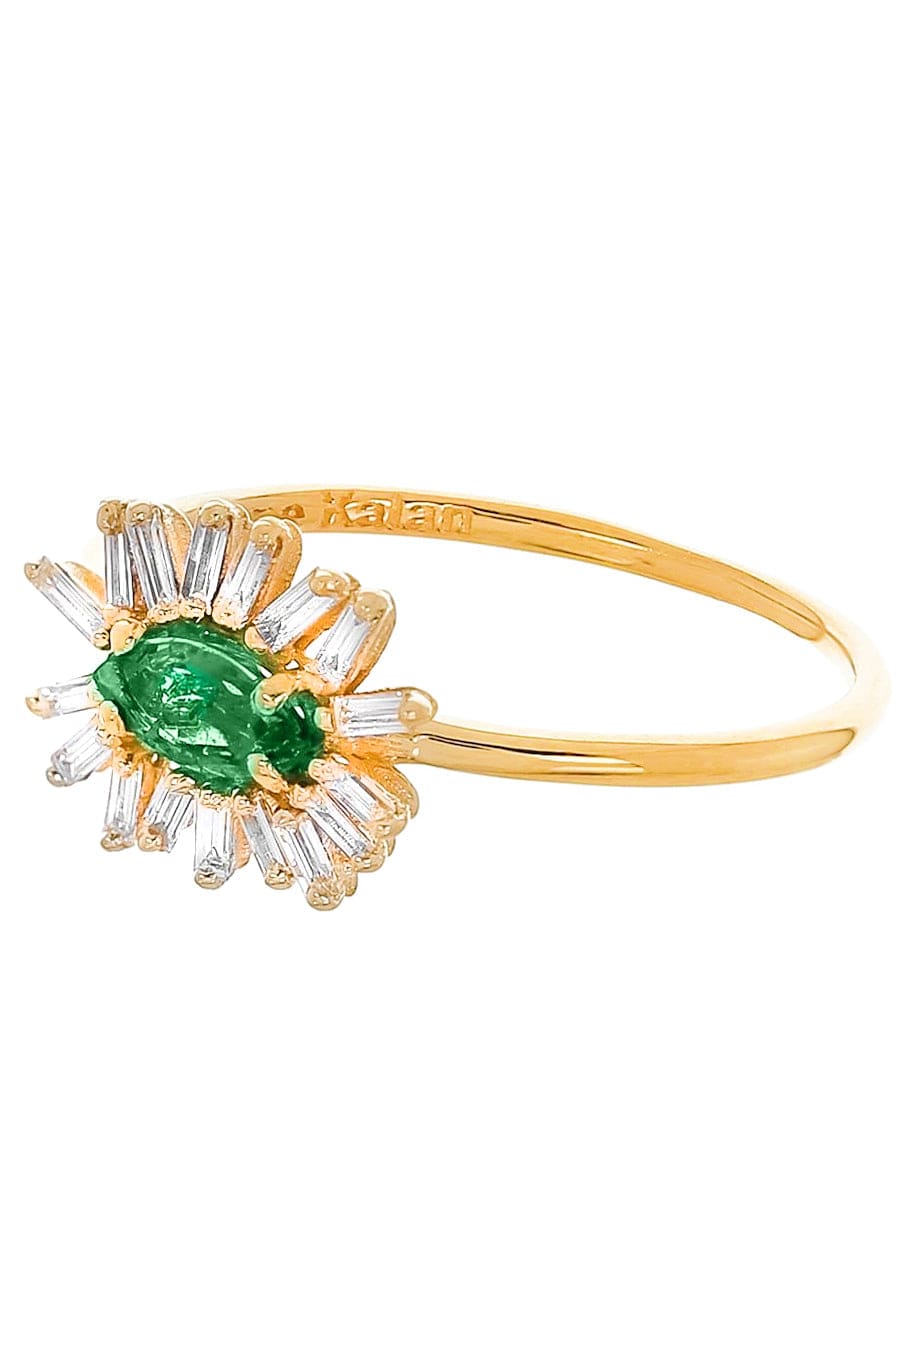 SUZANNE KALAN-Horizontal Emerald and Baguette Diamond Ring-YELLOW GOLD